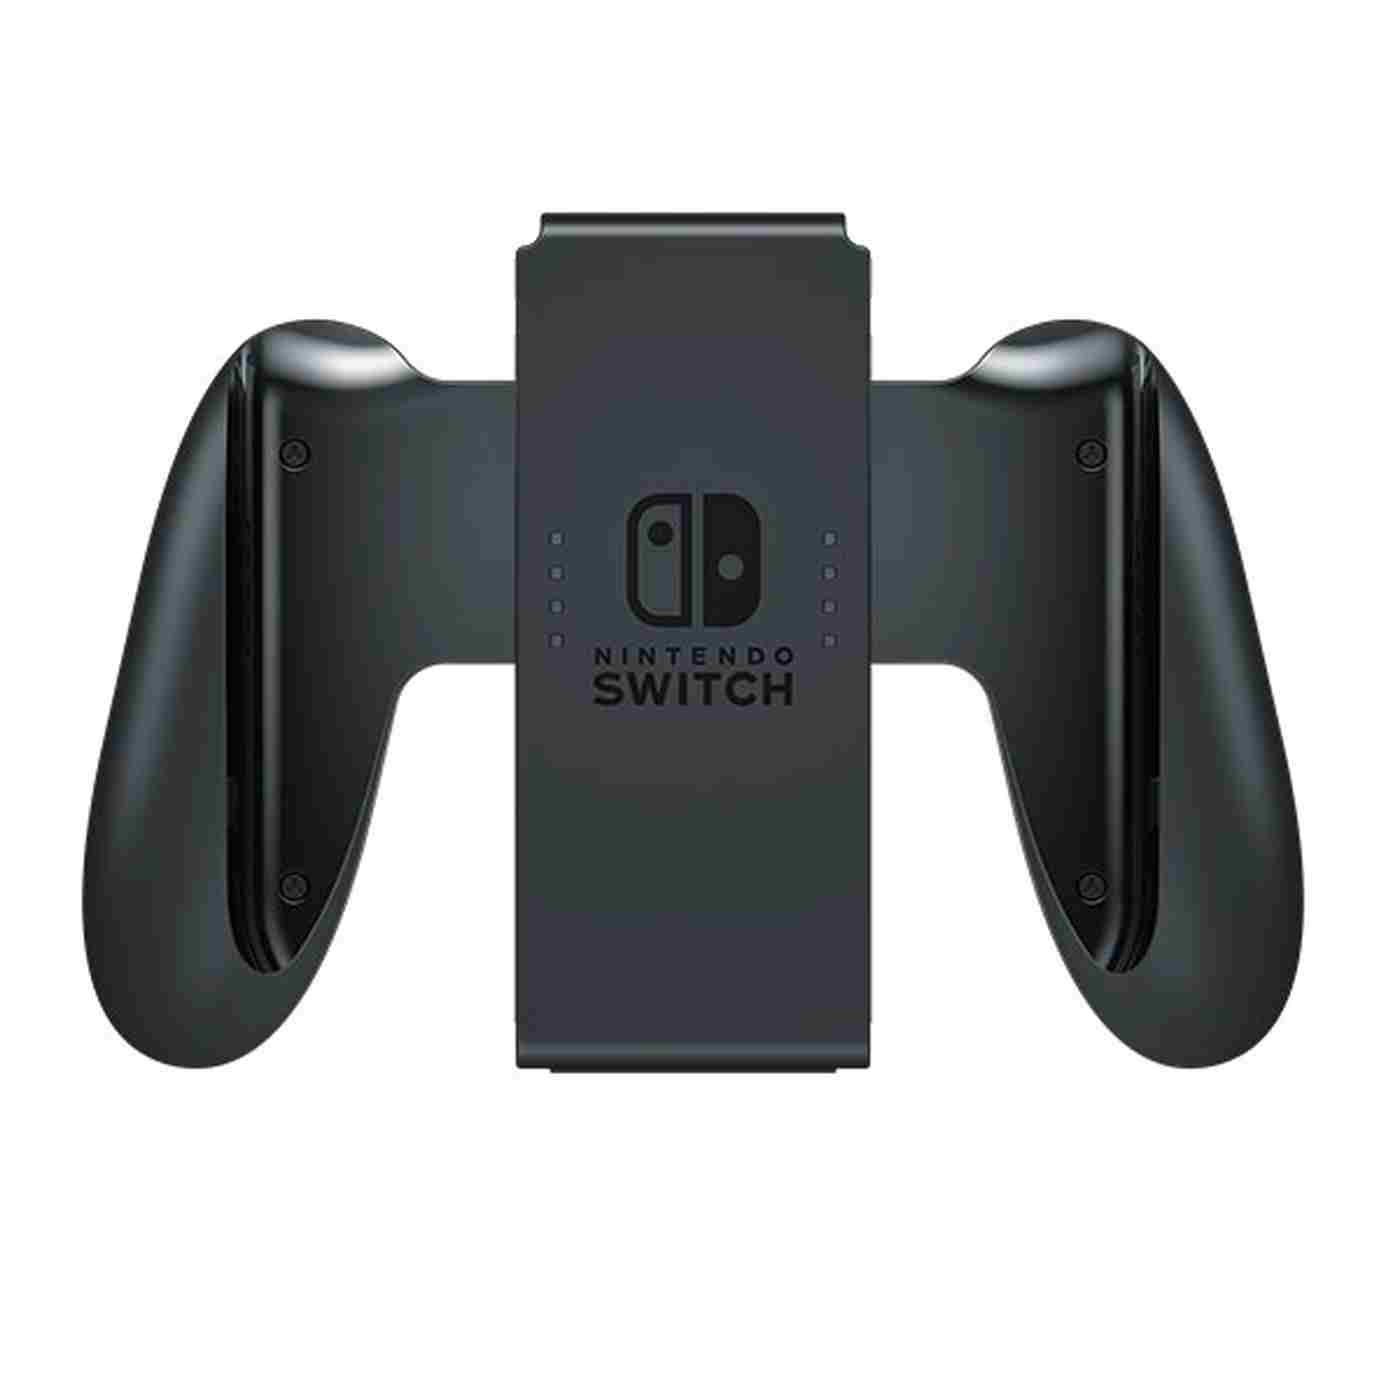 Nintendo Switch charging grip